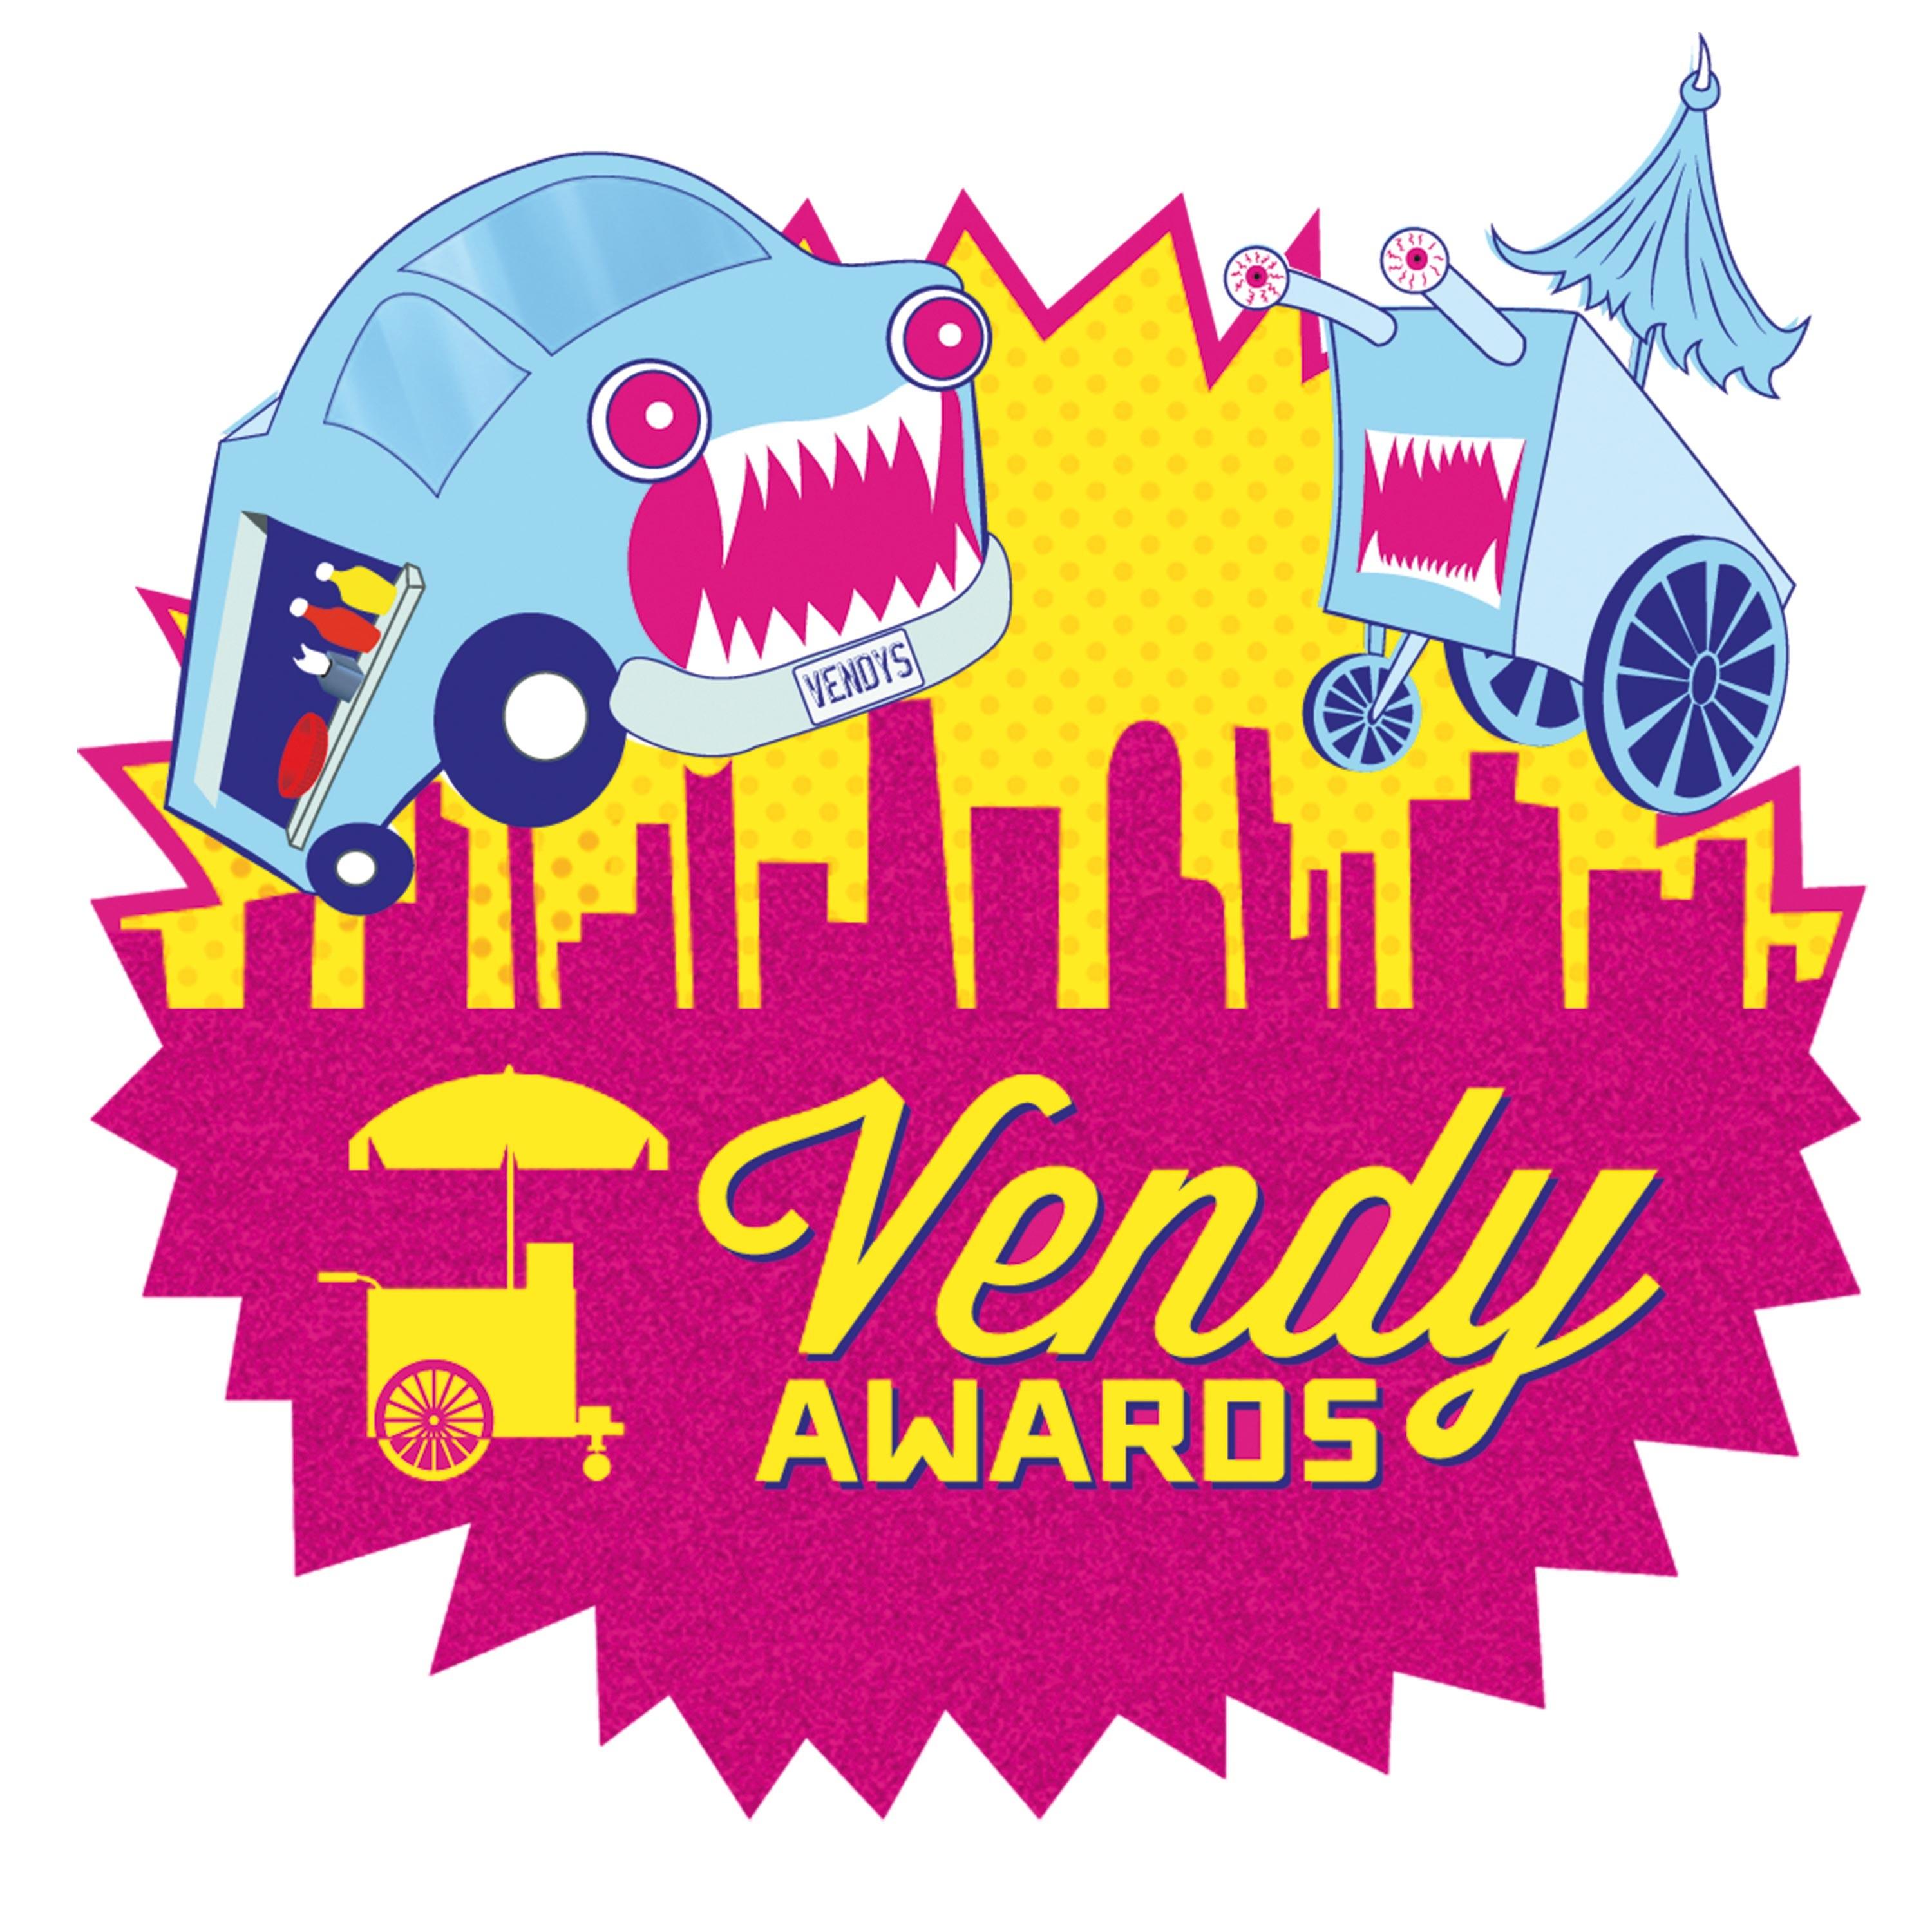 Vendy Awards